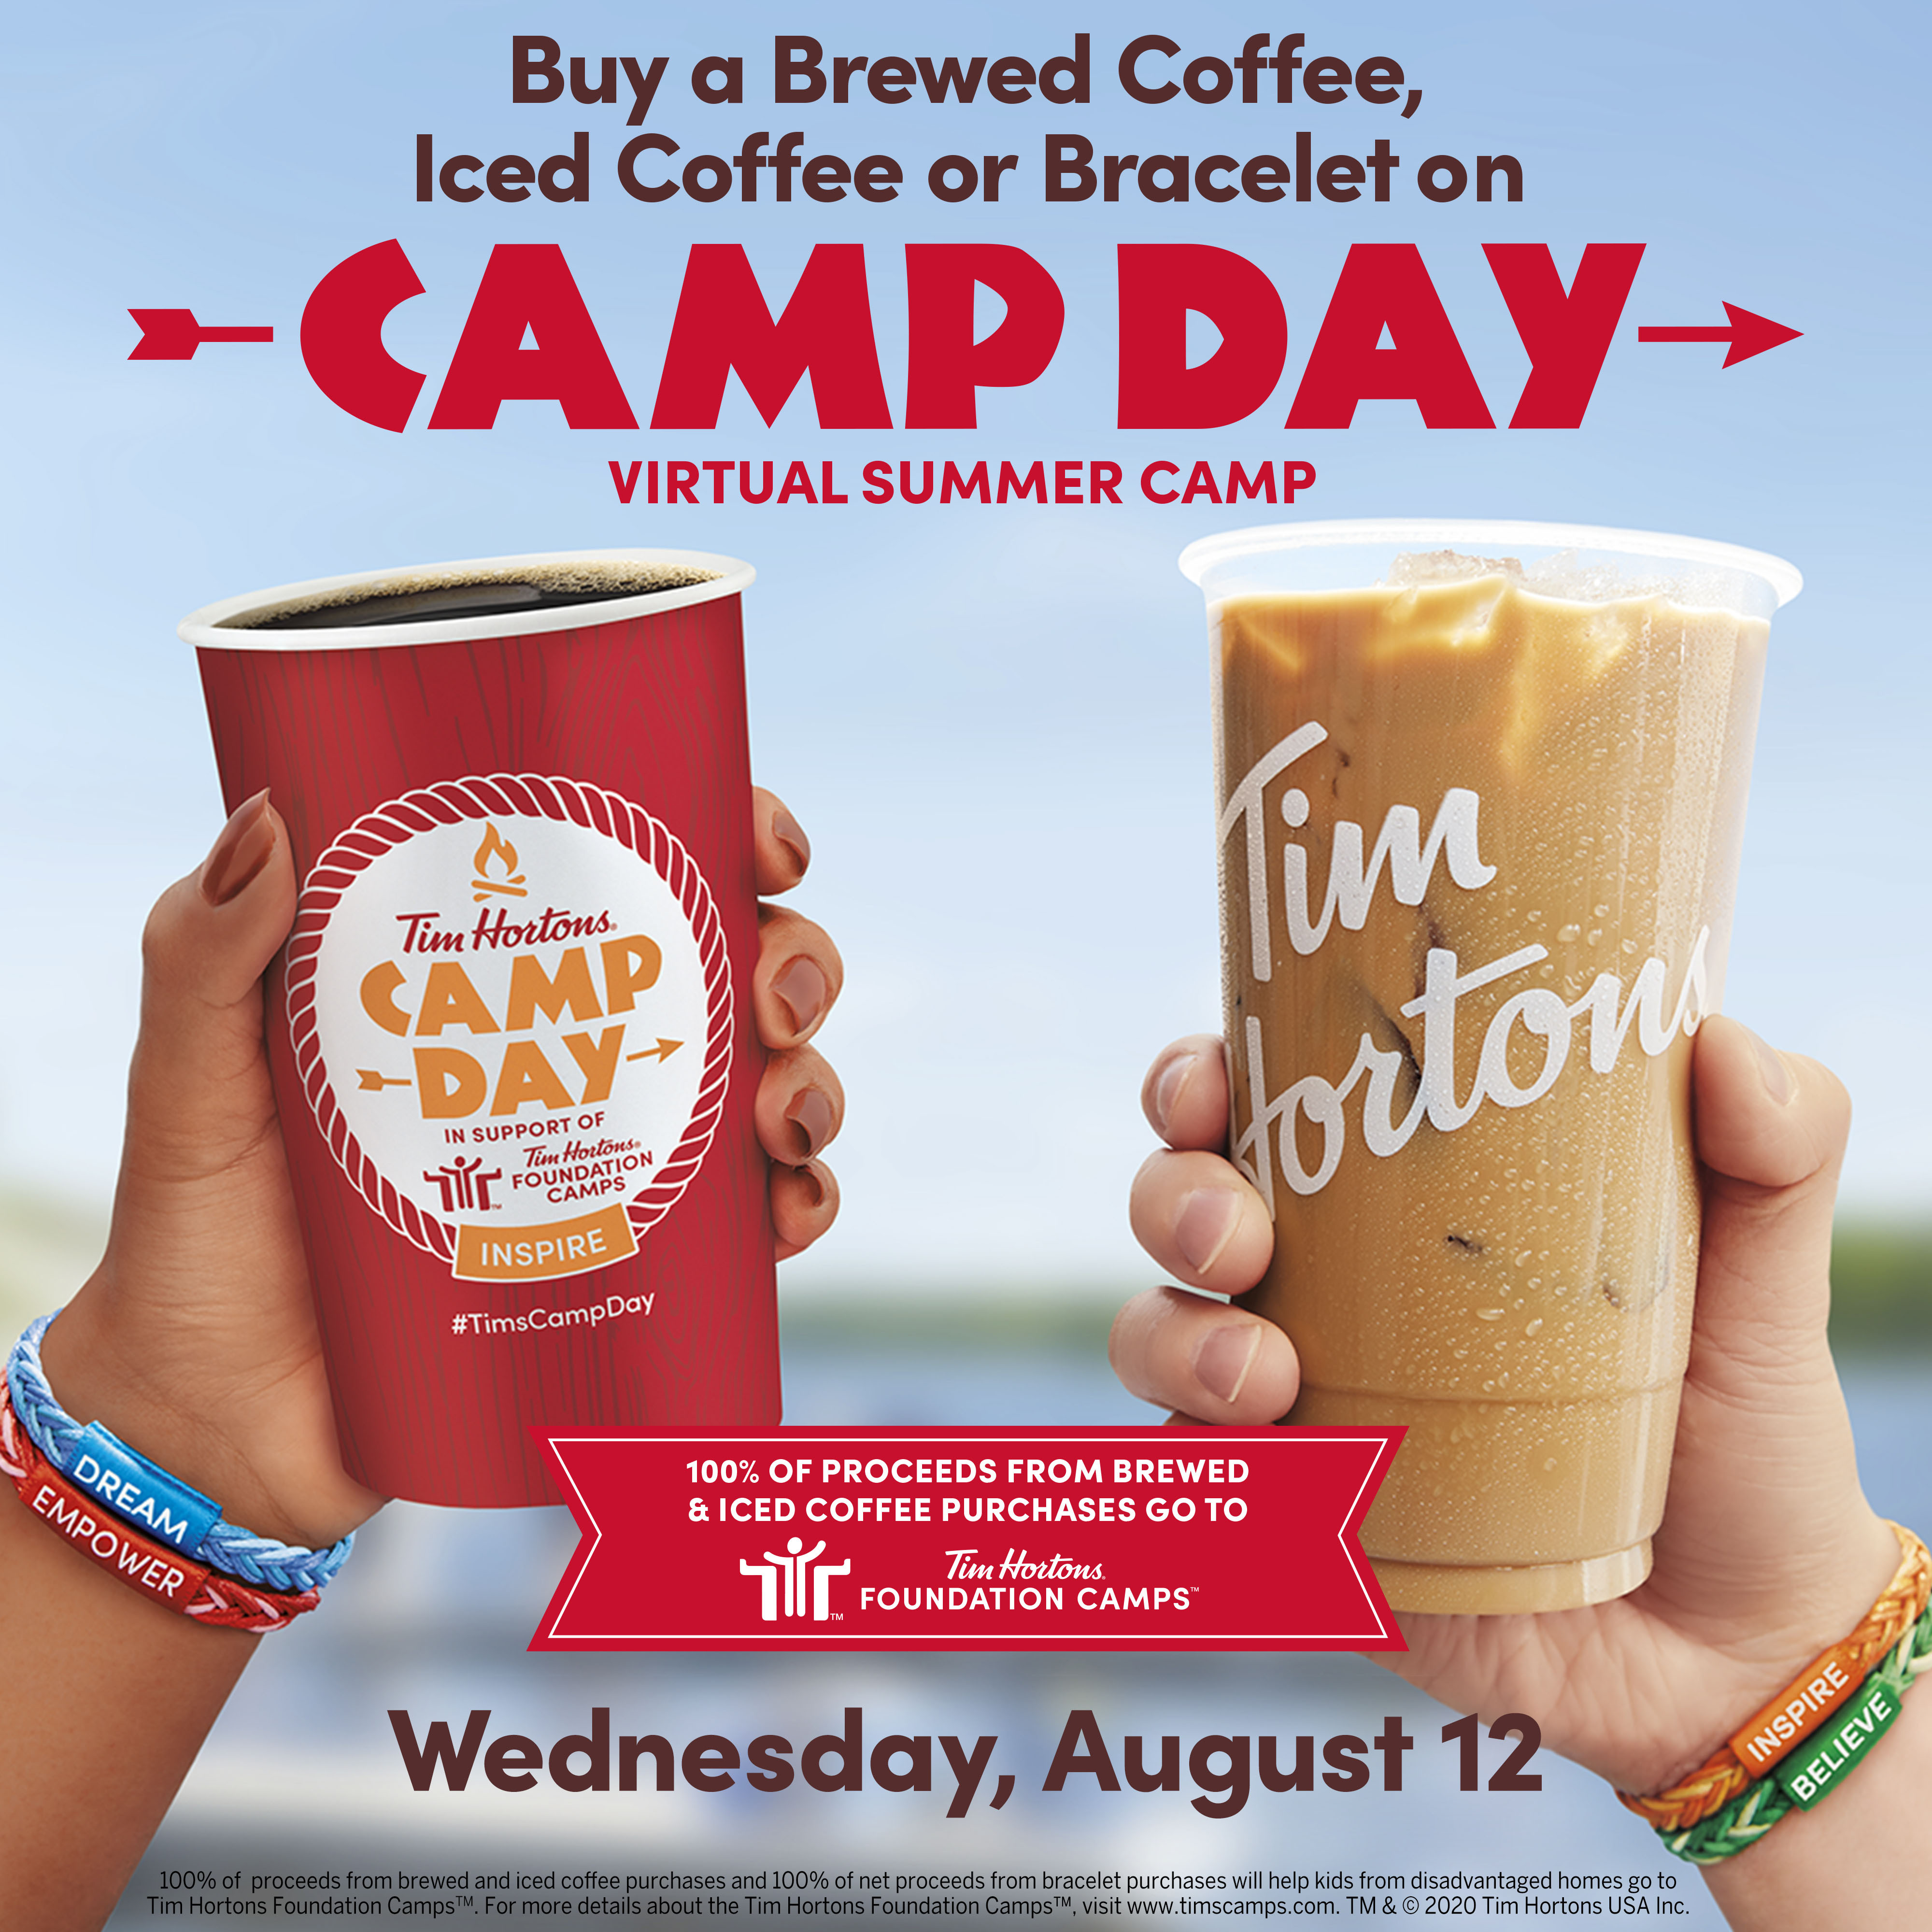 Tim Hortons International Coffee Day Promo Details